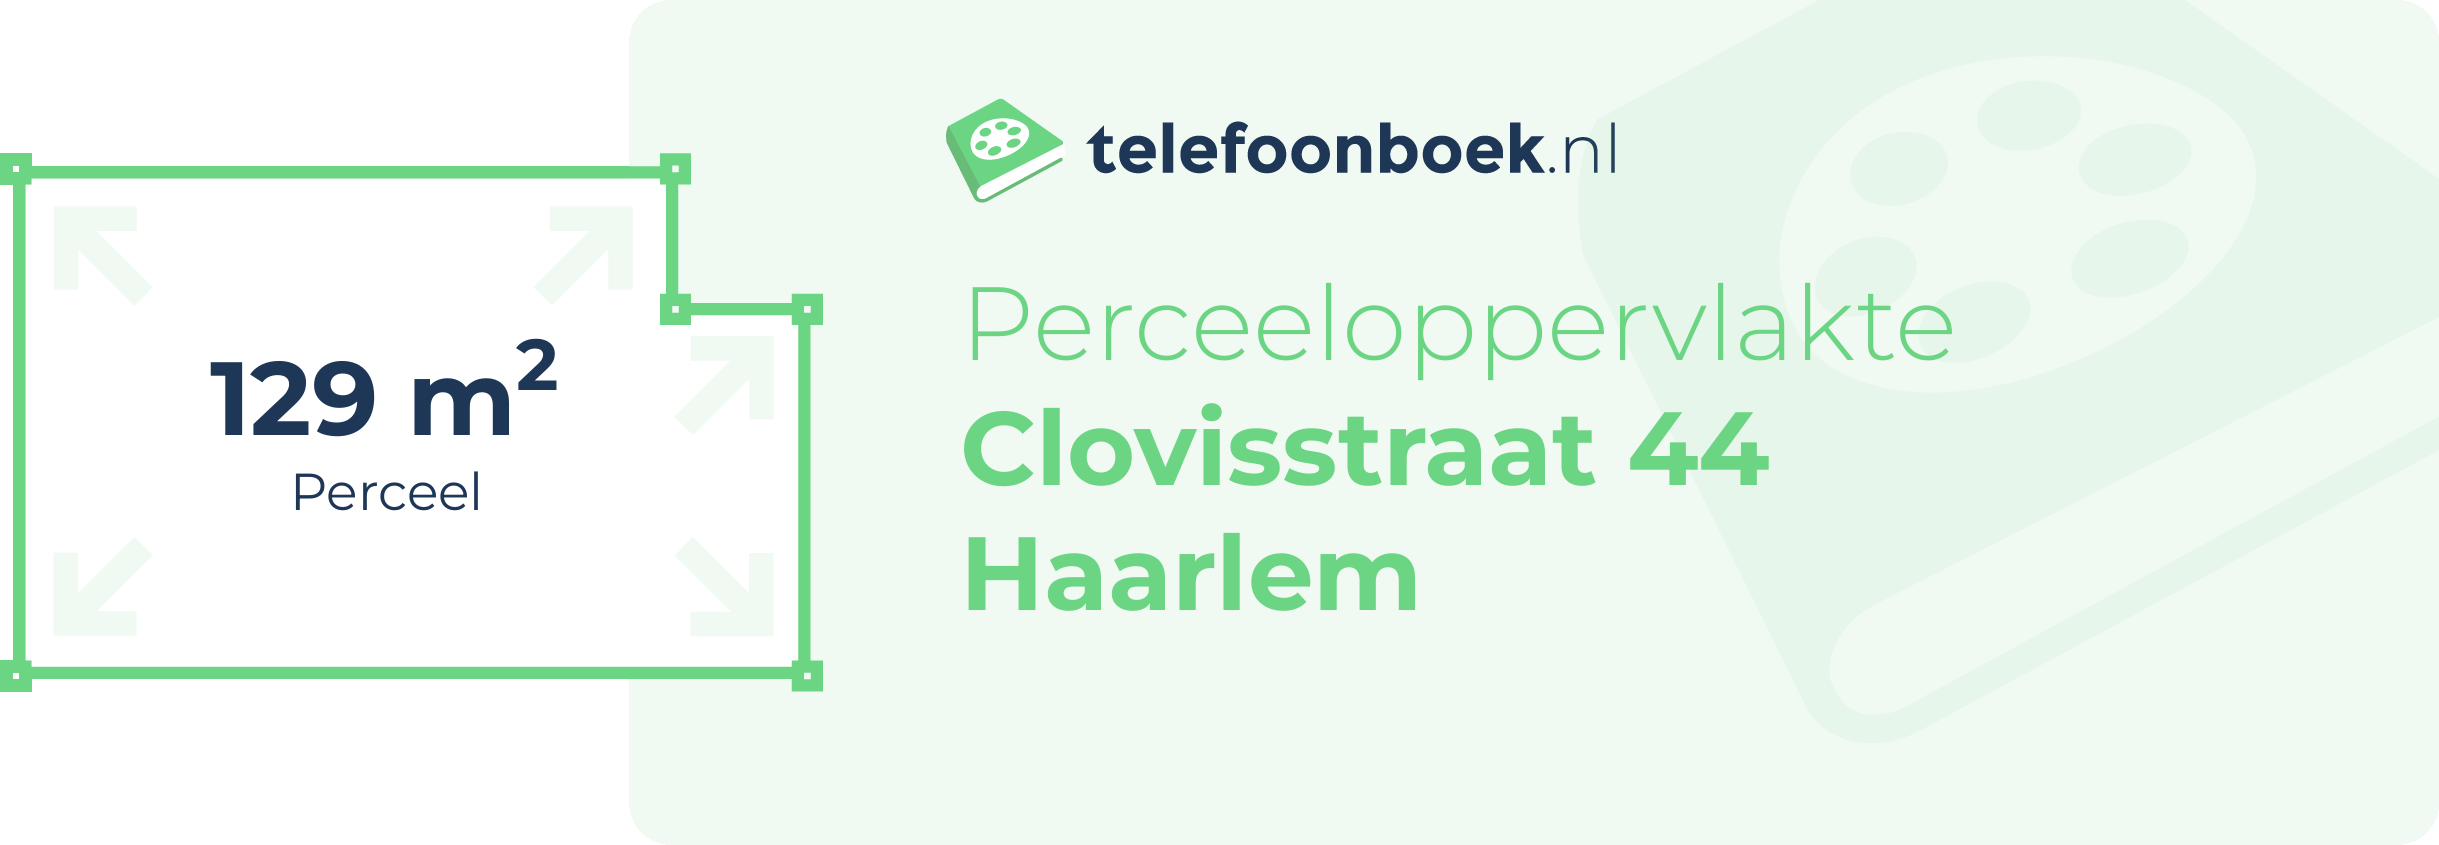 Perceeloppervlakte Clovisstraat 44 Haarlem